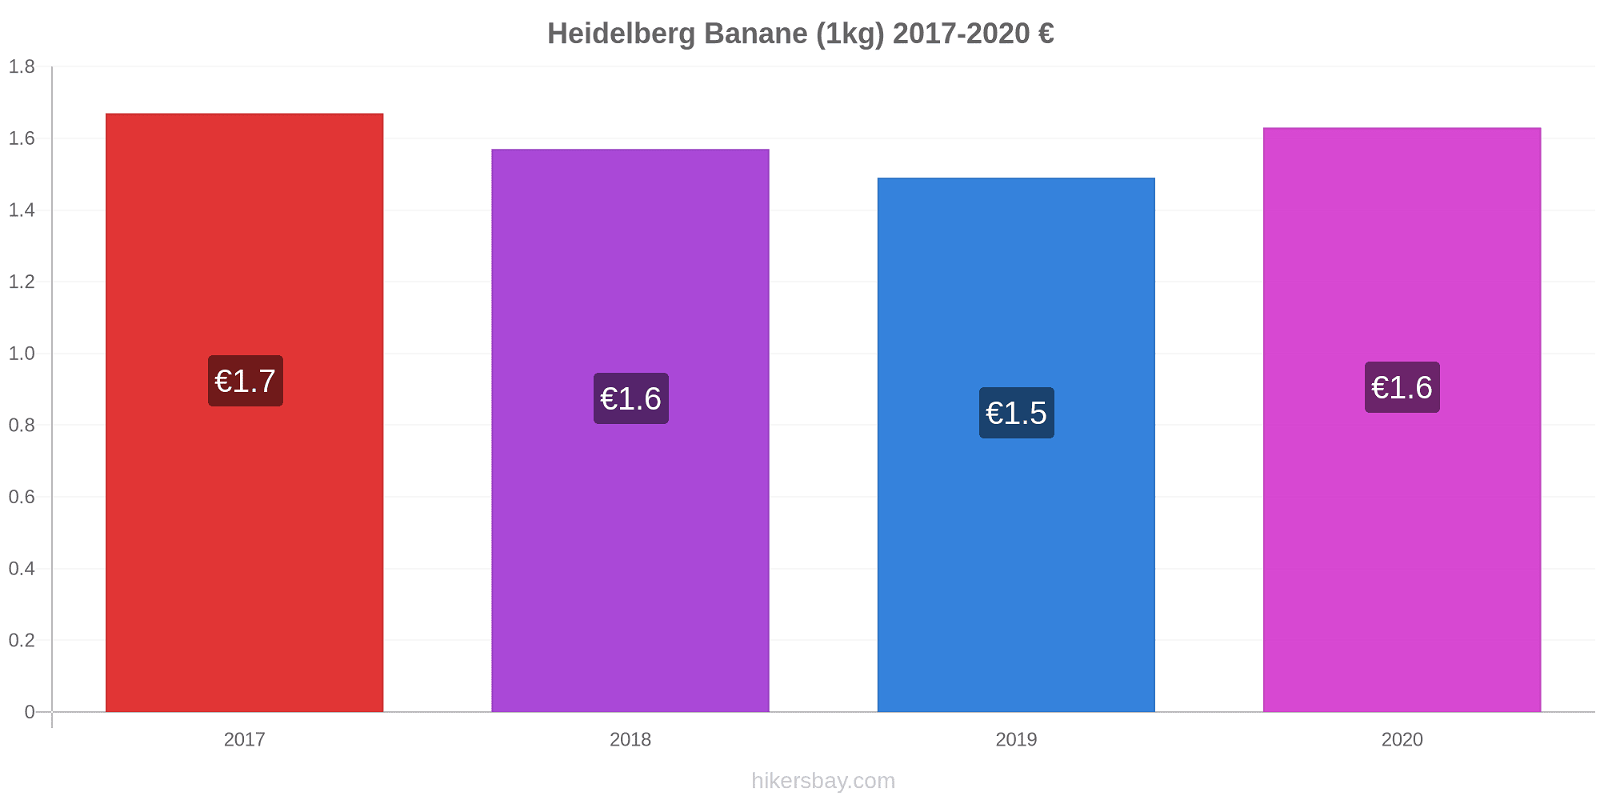 Heidelberg variazioni di prezzo Banana (1kg) hikersbay.com